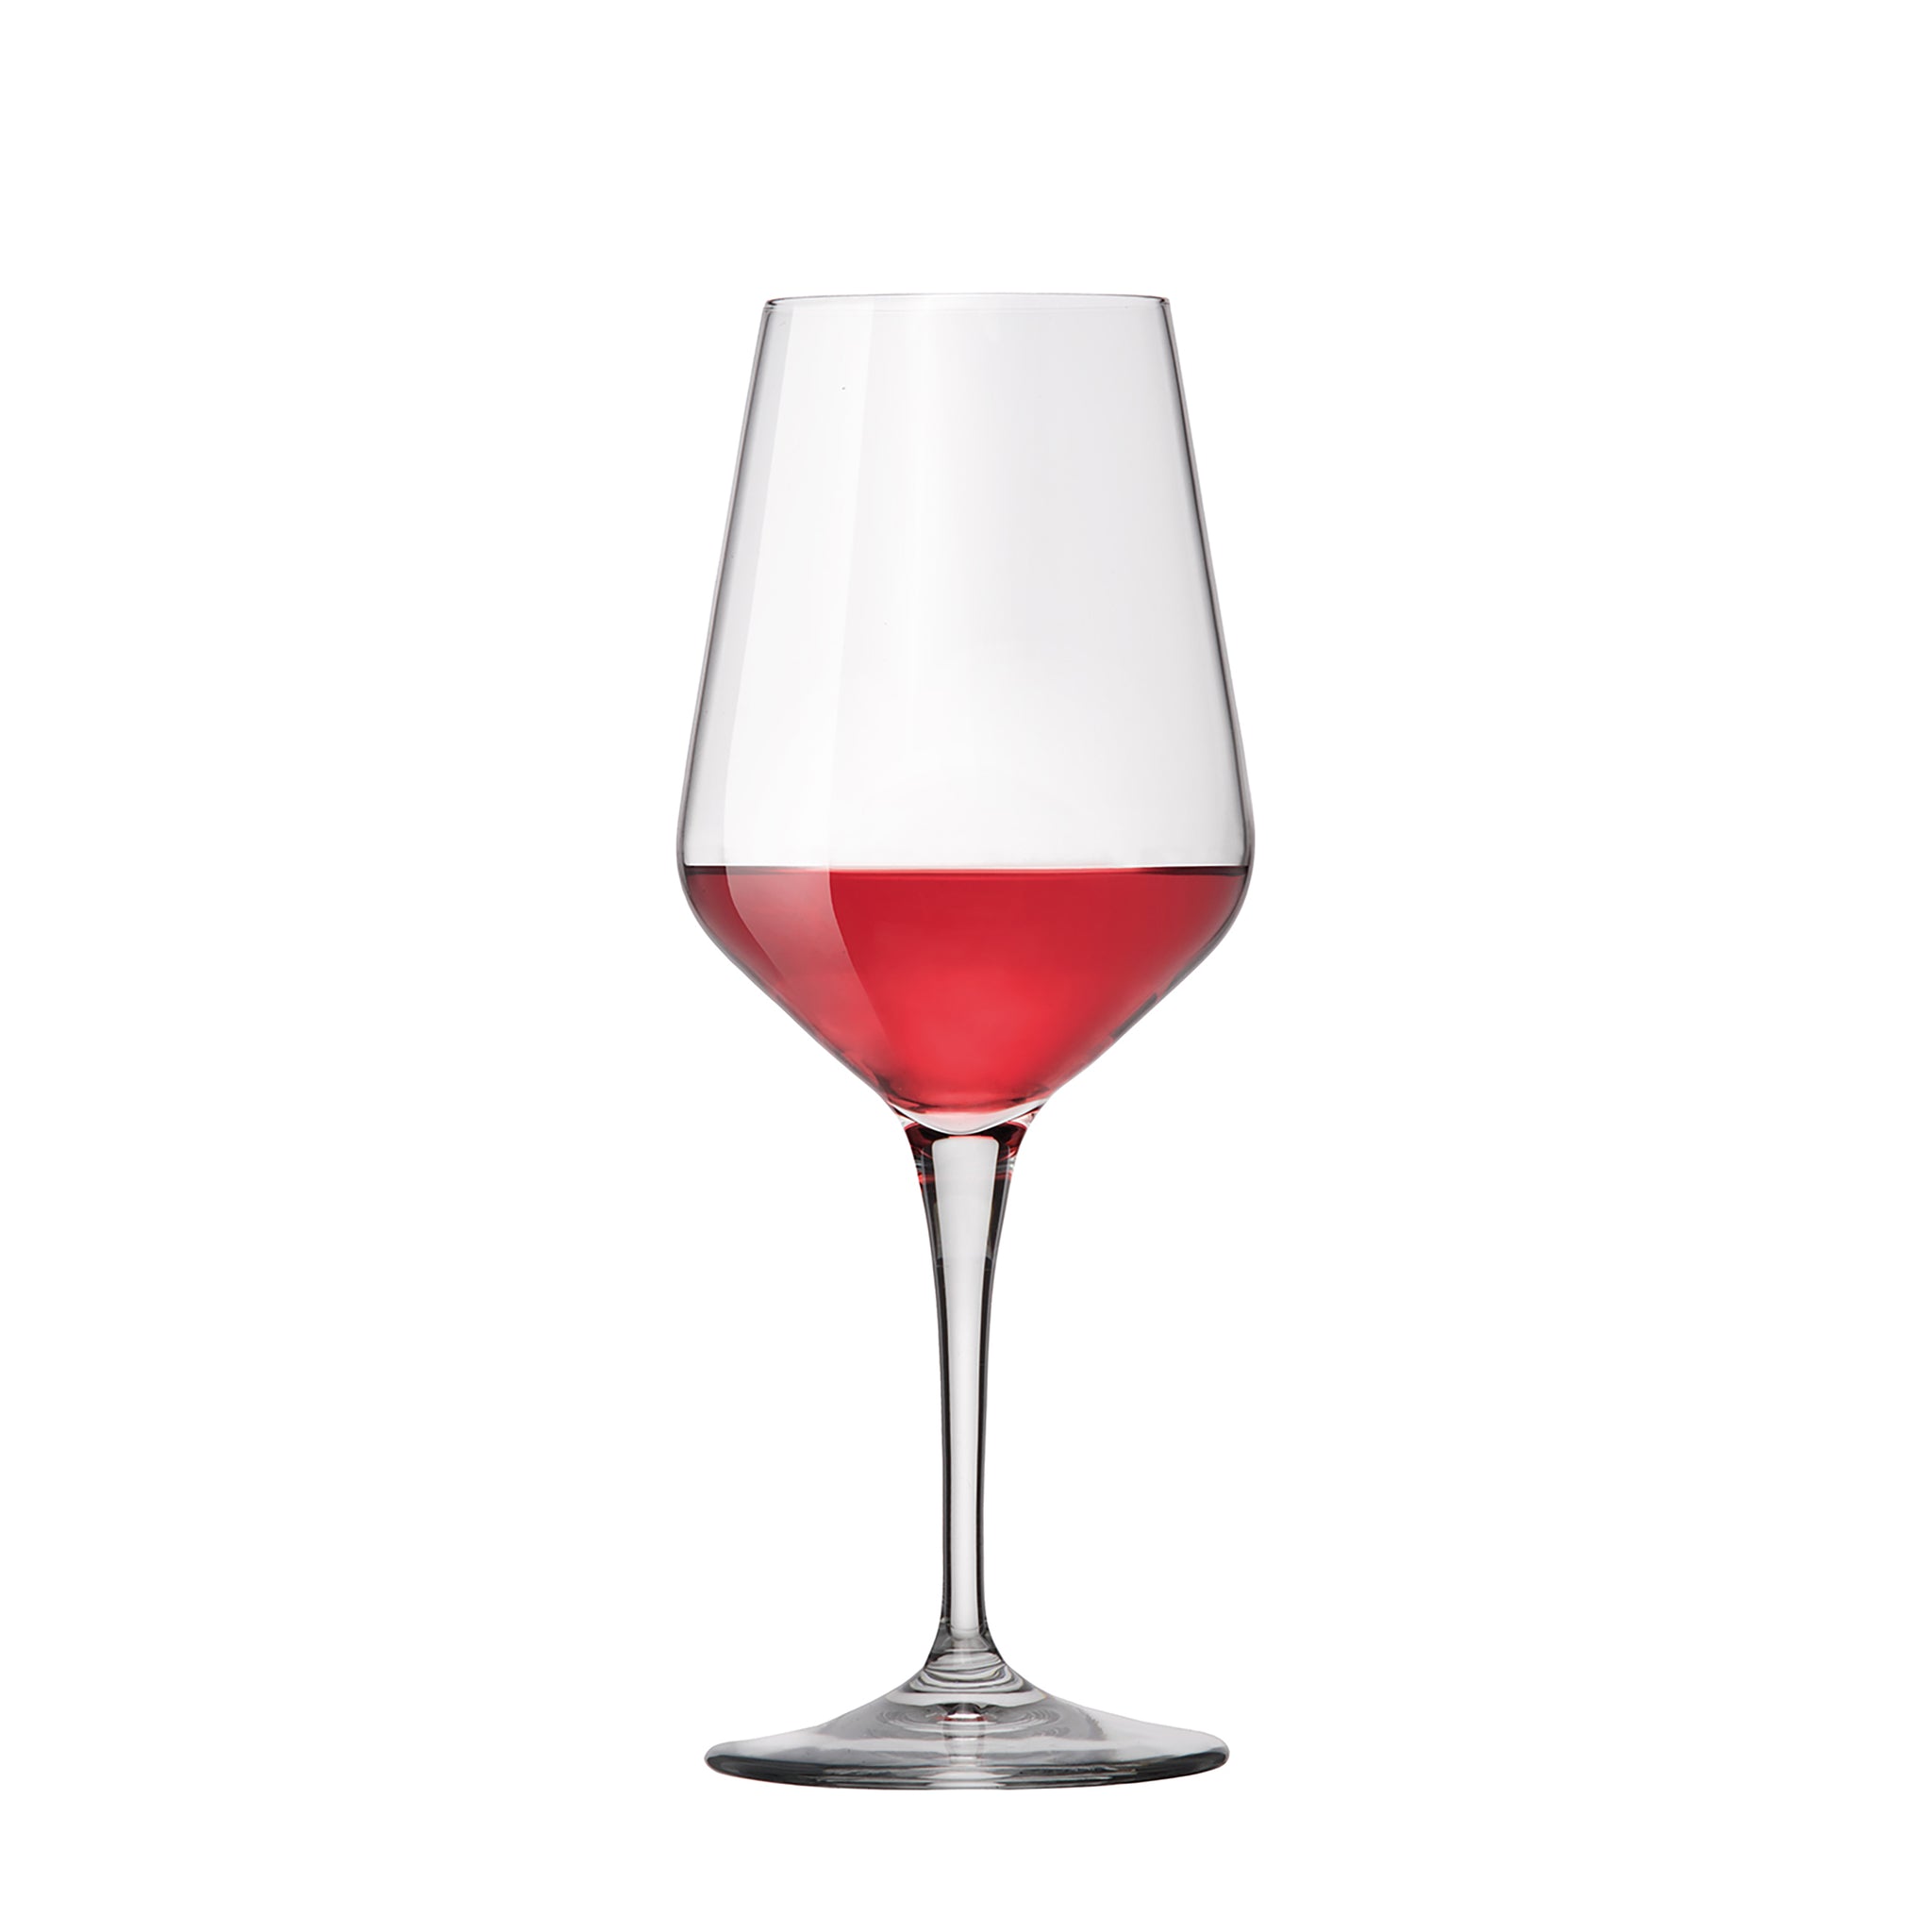 Electra 18.25 oz. Large Red Wine Glasses (Set of 6)